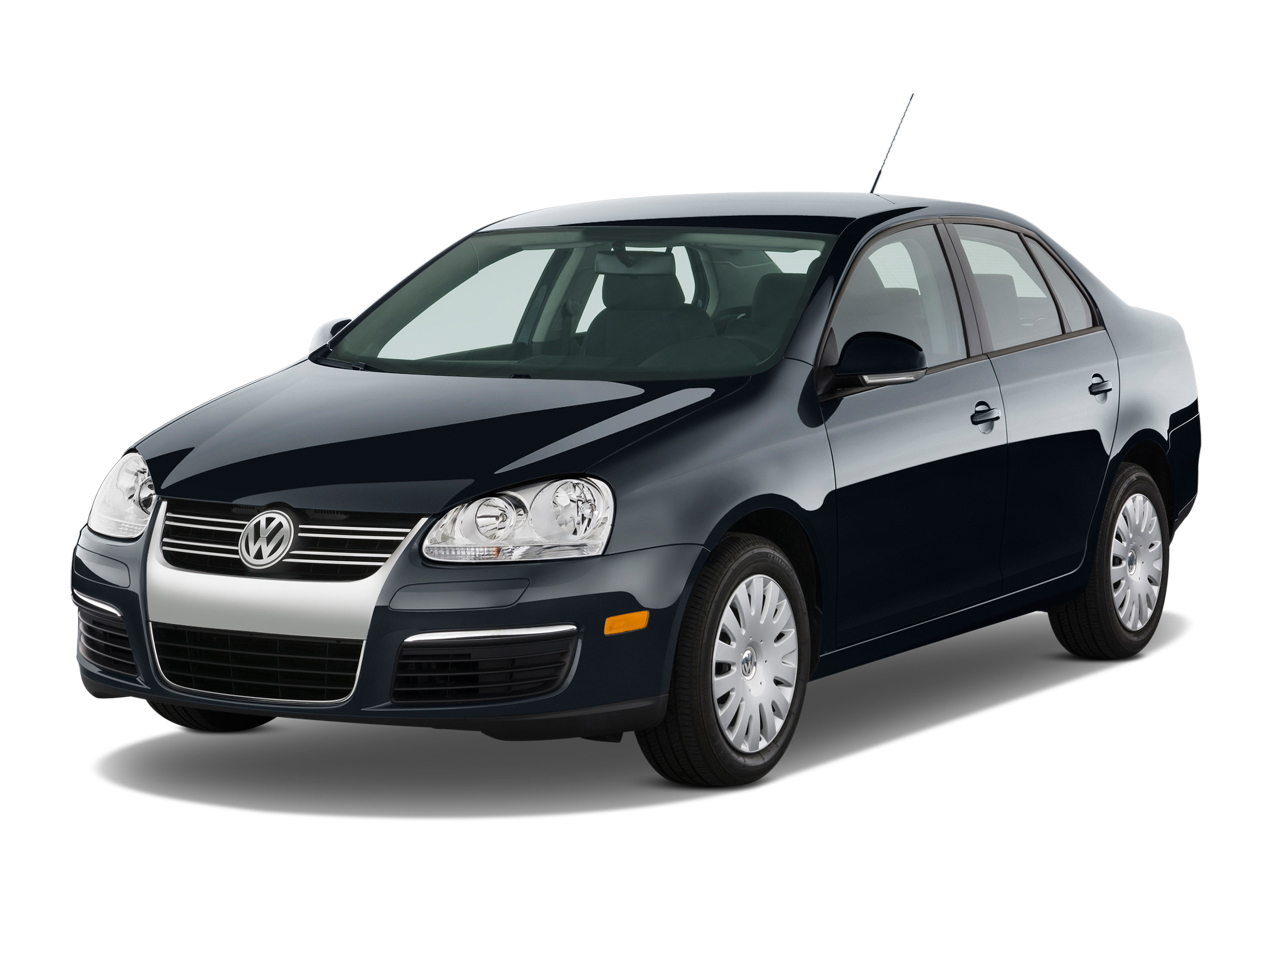 2010 Volkswagen Jetta Vw Review Ratings Specs Prices